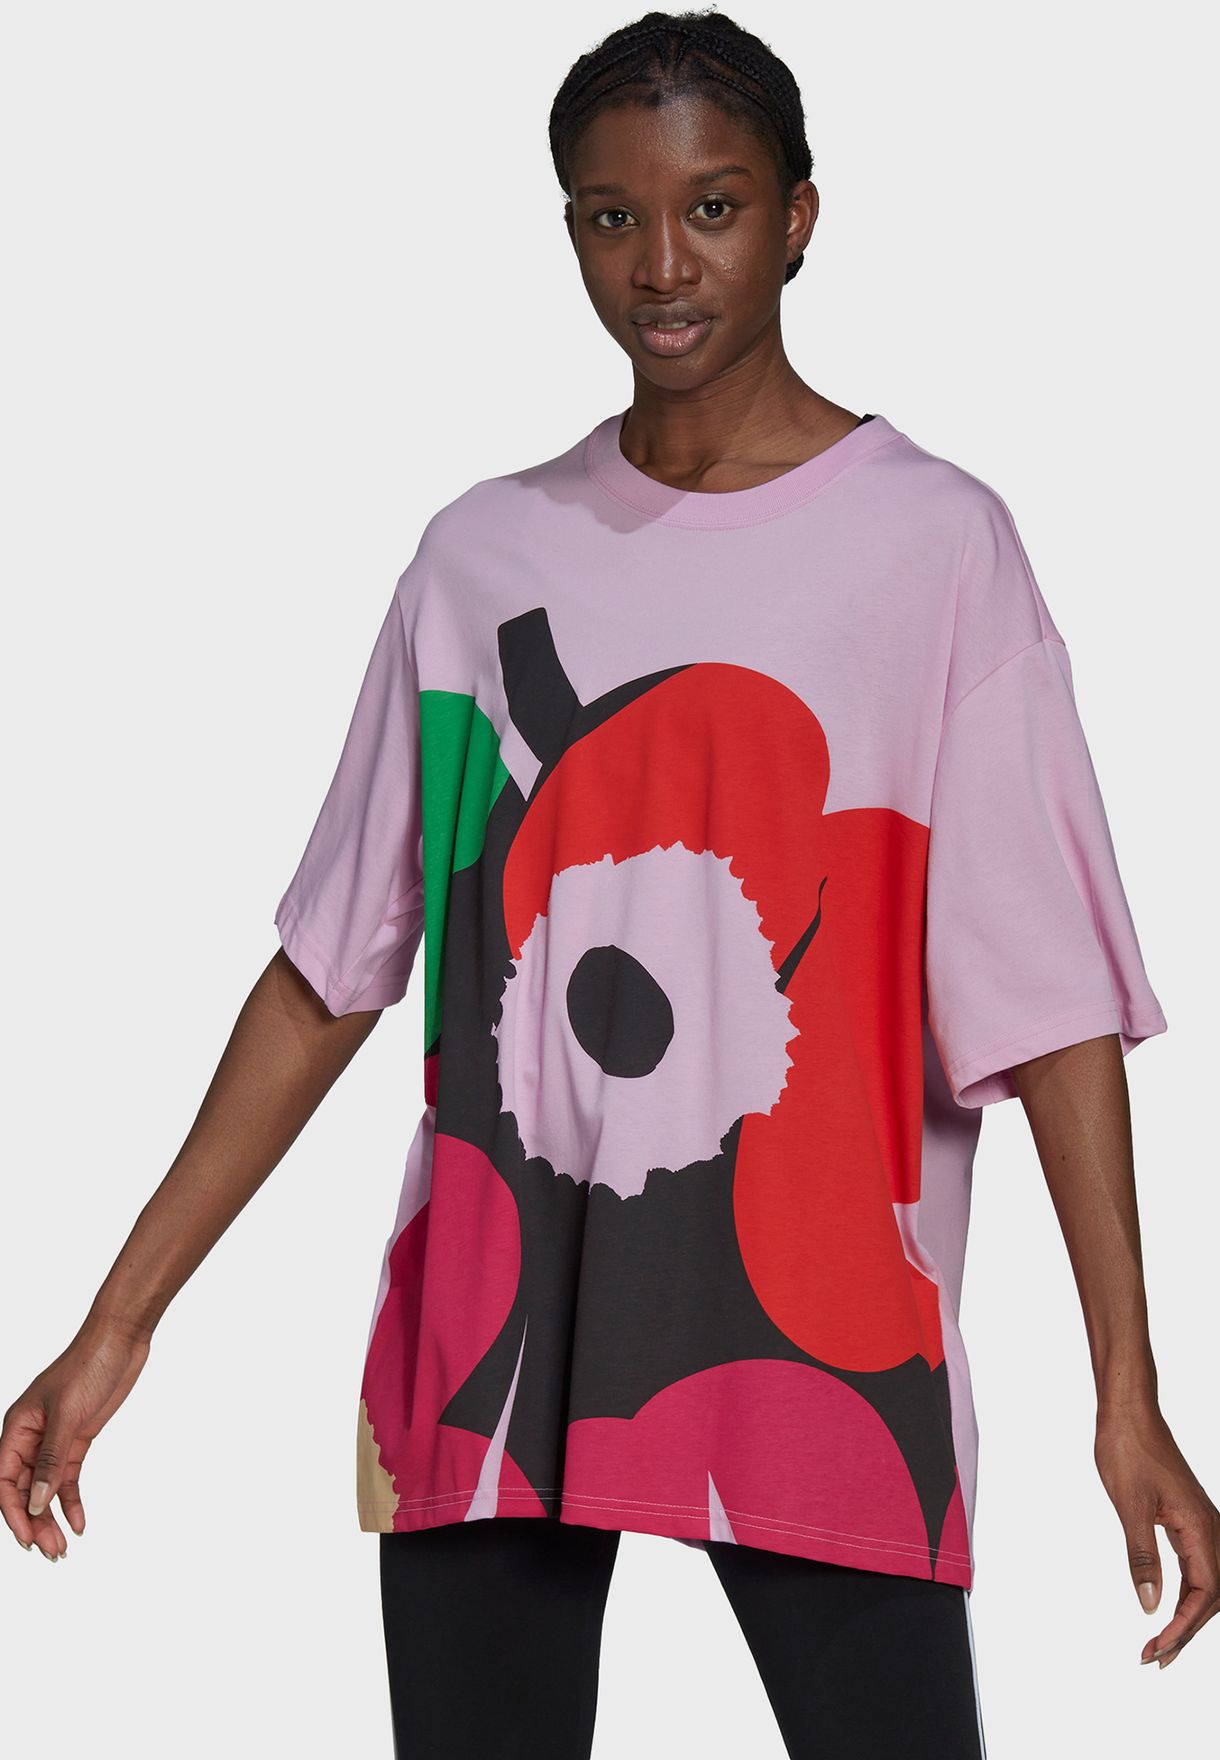 Adidas X Marimekko Graphic T-Shirt